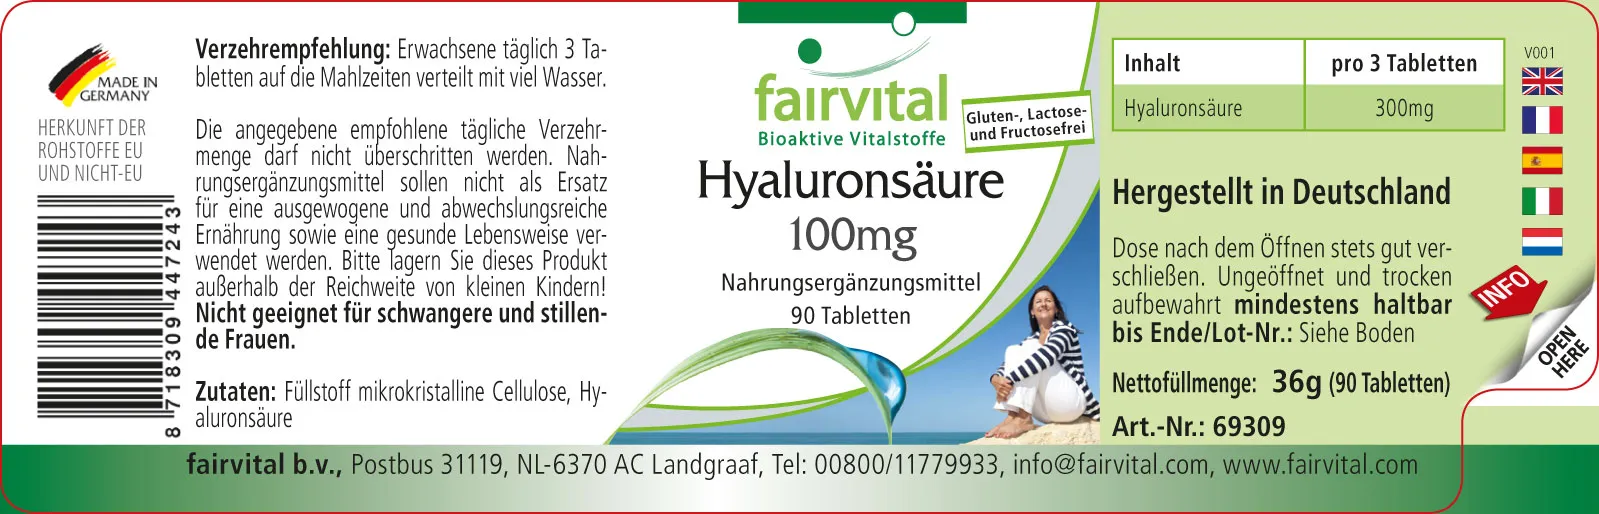 Hyaluronic acid 100mg - 90 tablets